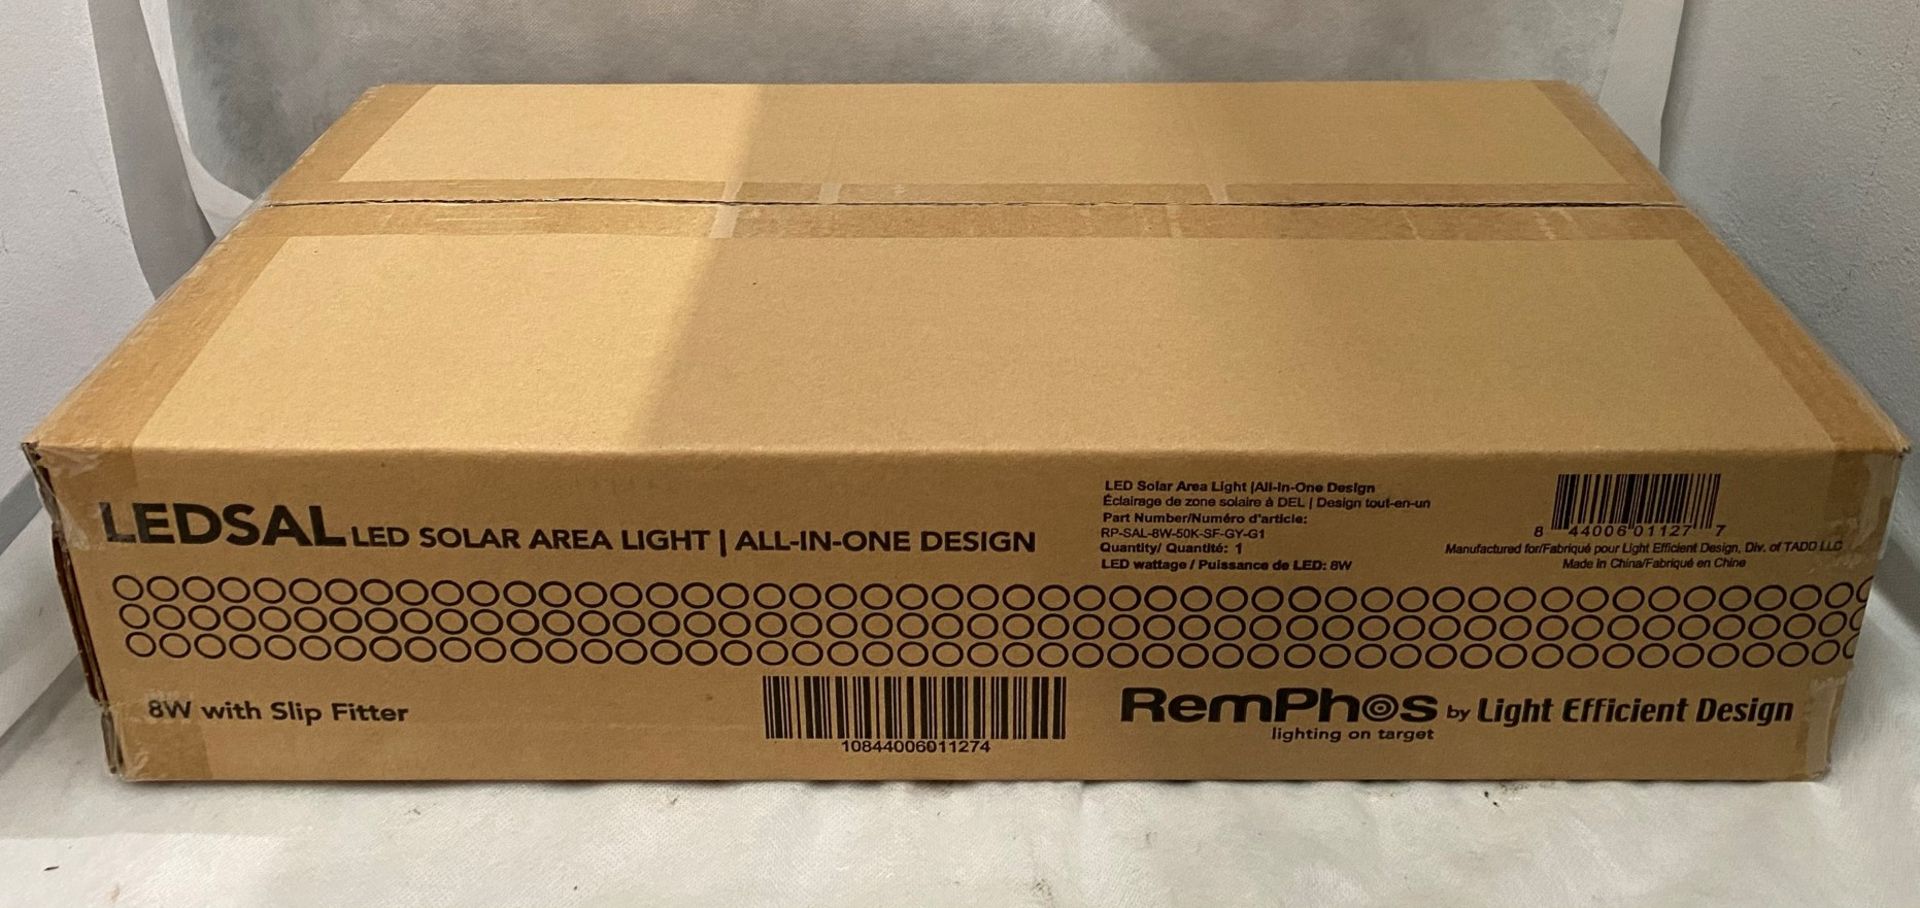 A RemPhos by Light Efficient Design LEDSAL LED Solar Area Light (All-In-One Design) - Image 3 of 6